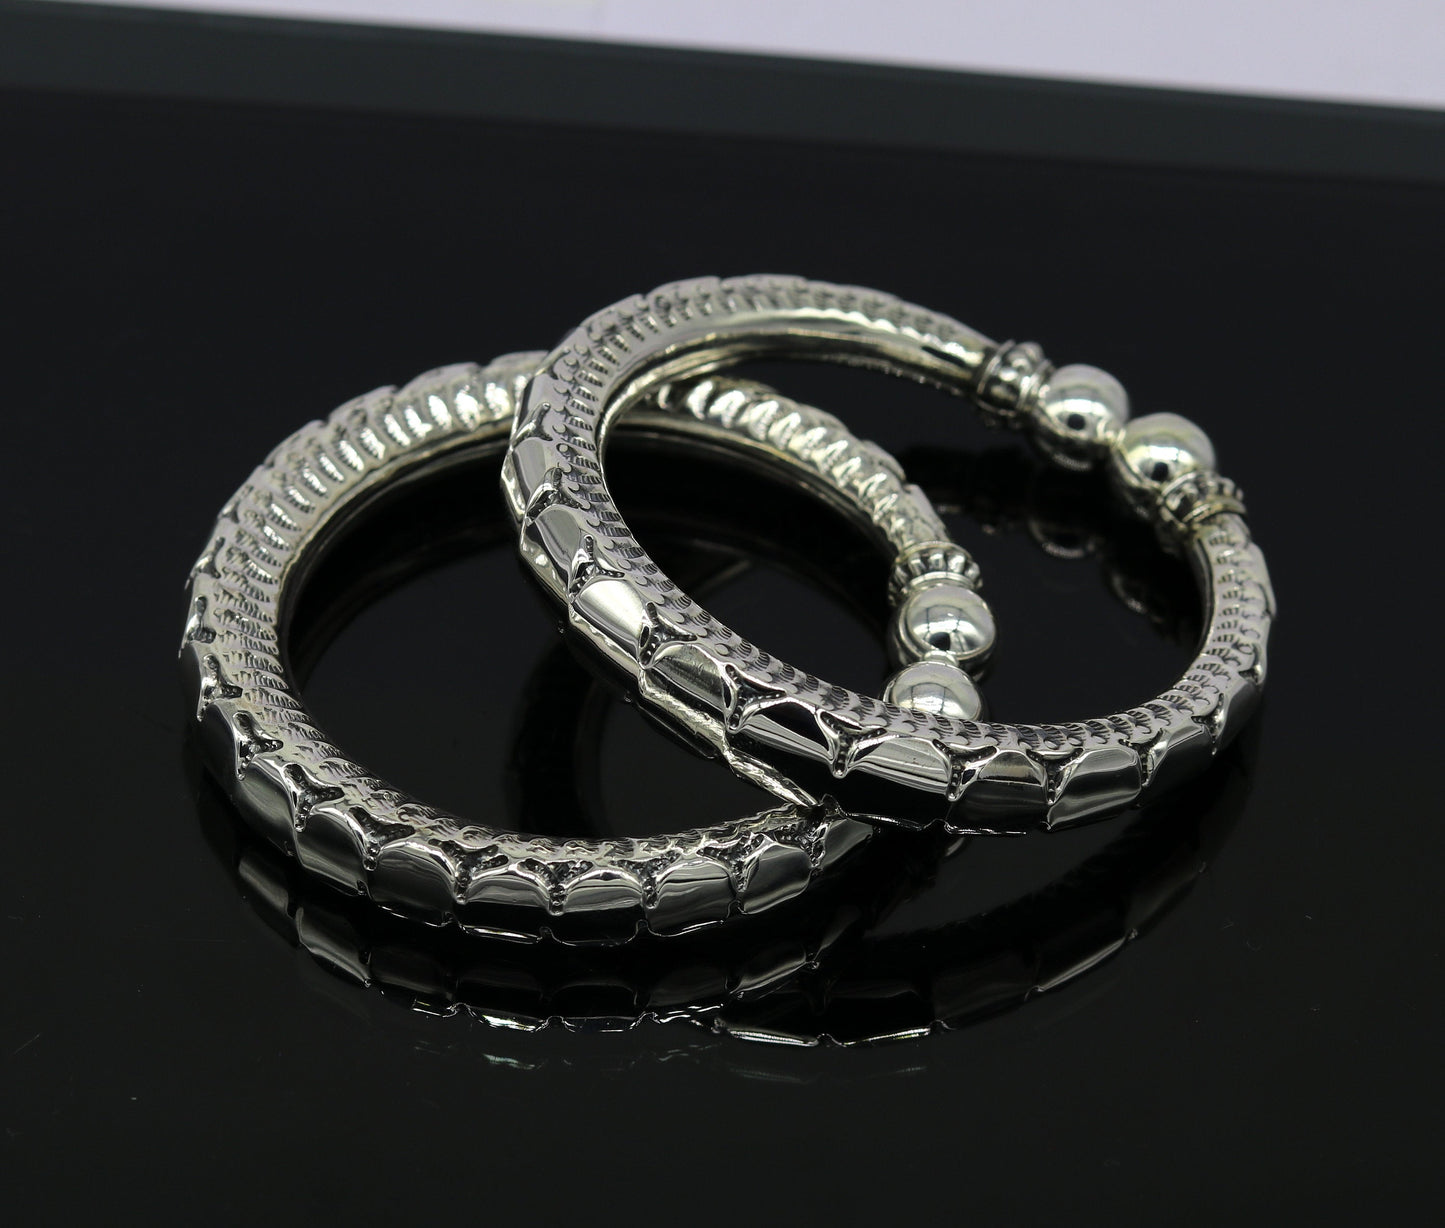 925 sterling silver handmade gorgeous customized work bangle bracelet kada pair, vintage antique design stylish bangle unisex jewelry nsk327 - TRIBAL ORNAMENTS